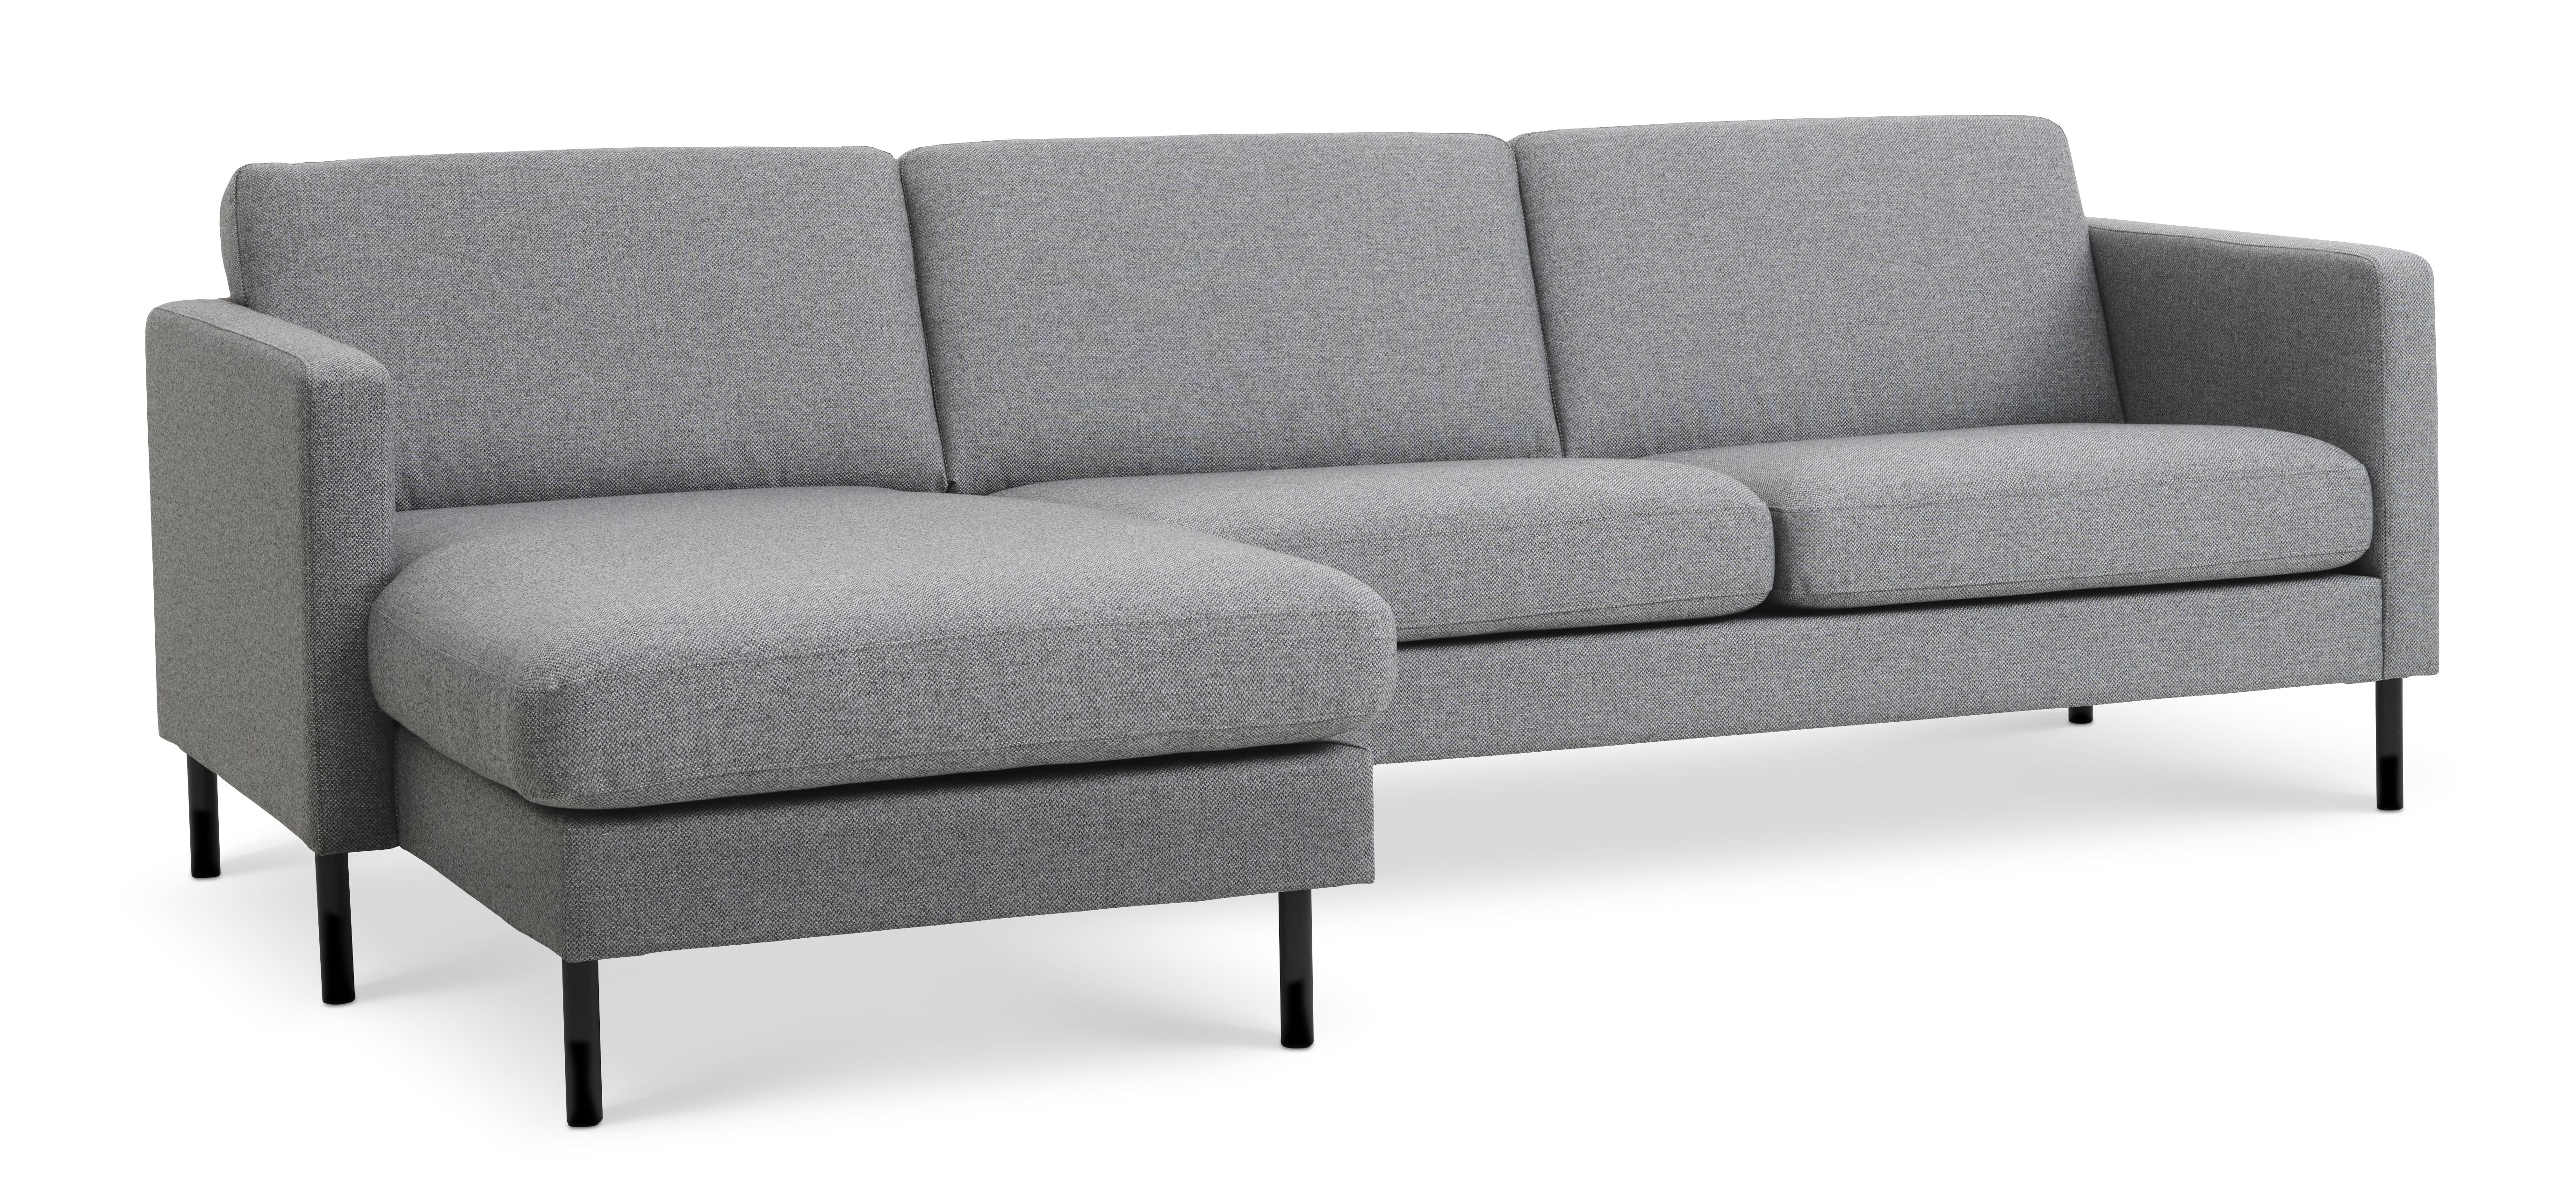 Ask sæt 51 3D sofa, m. chaiselong - lys granitgrå polyester stof og sort metal